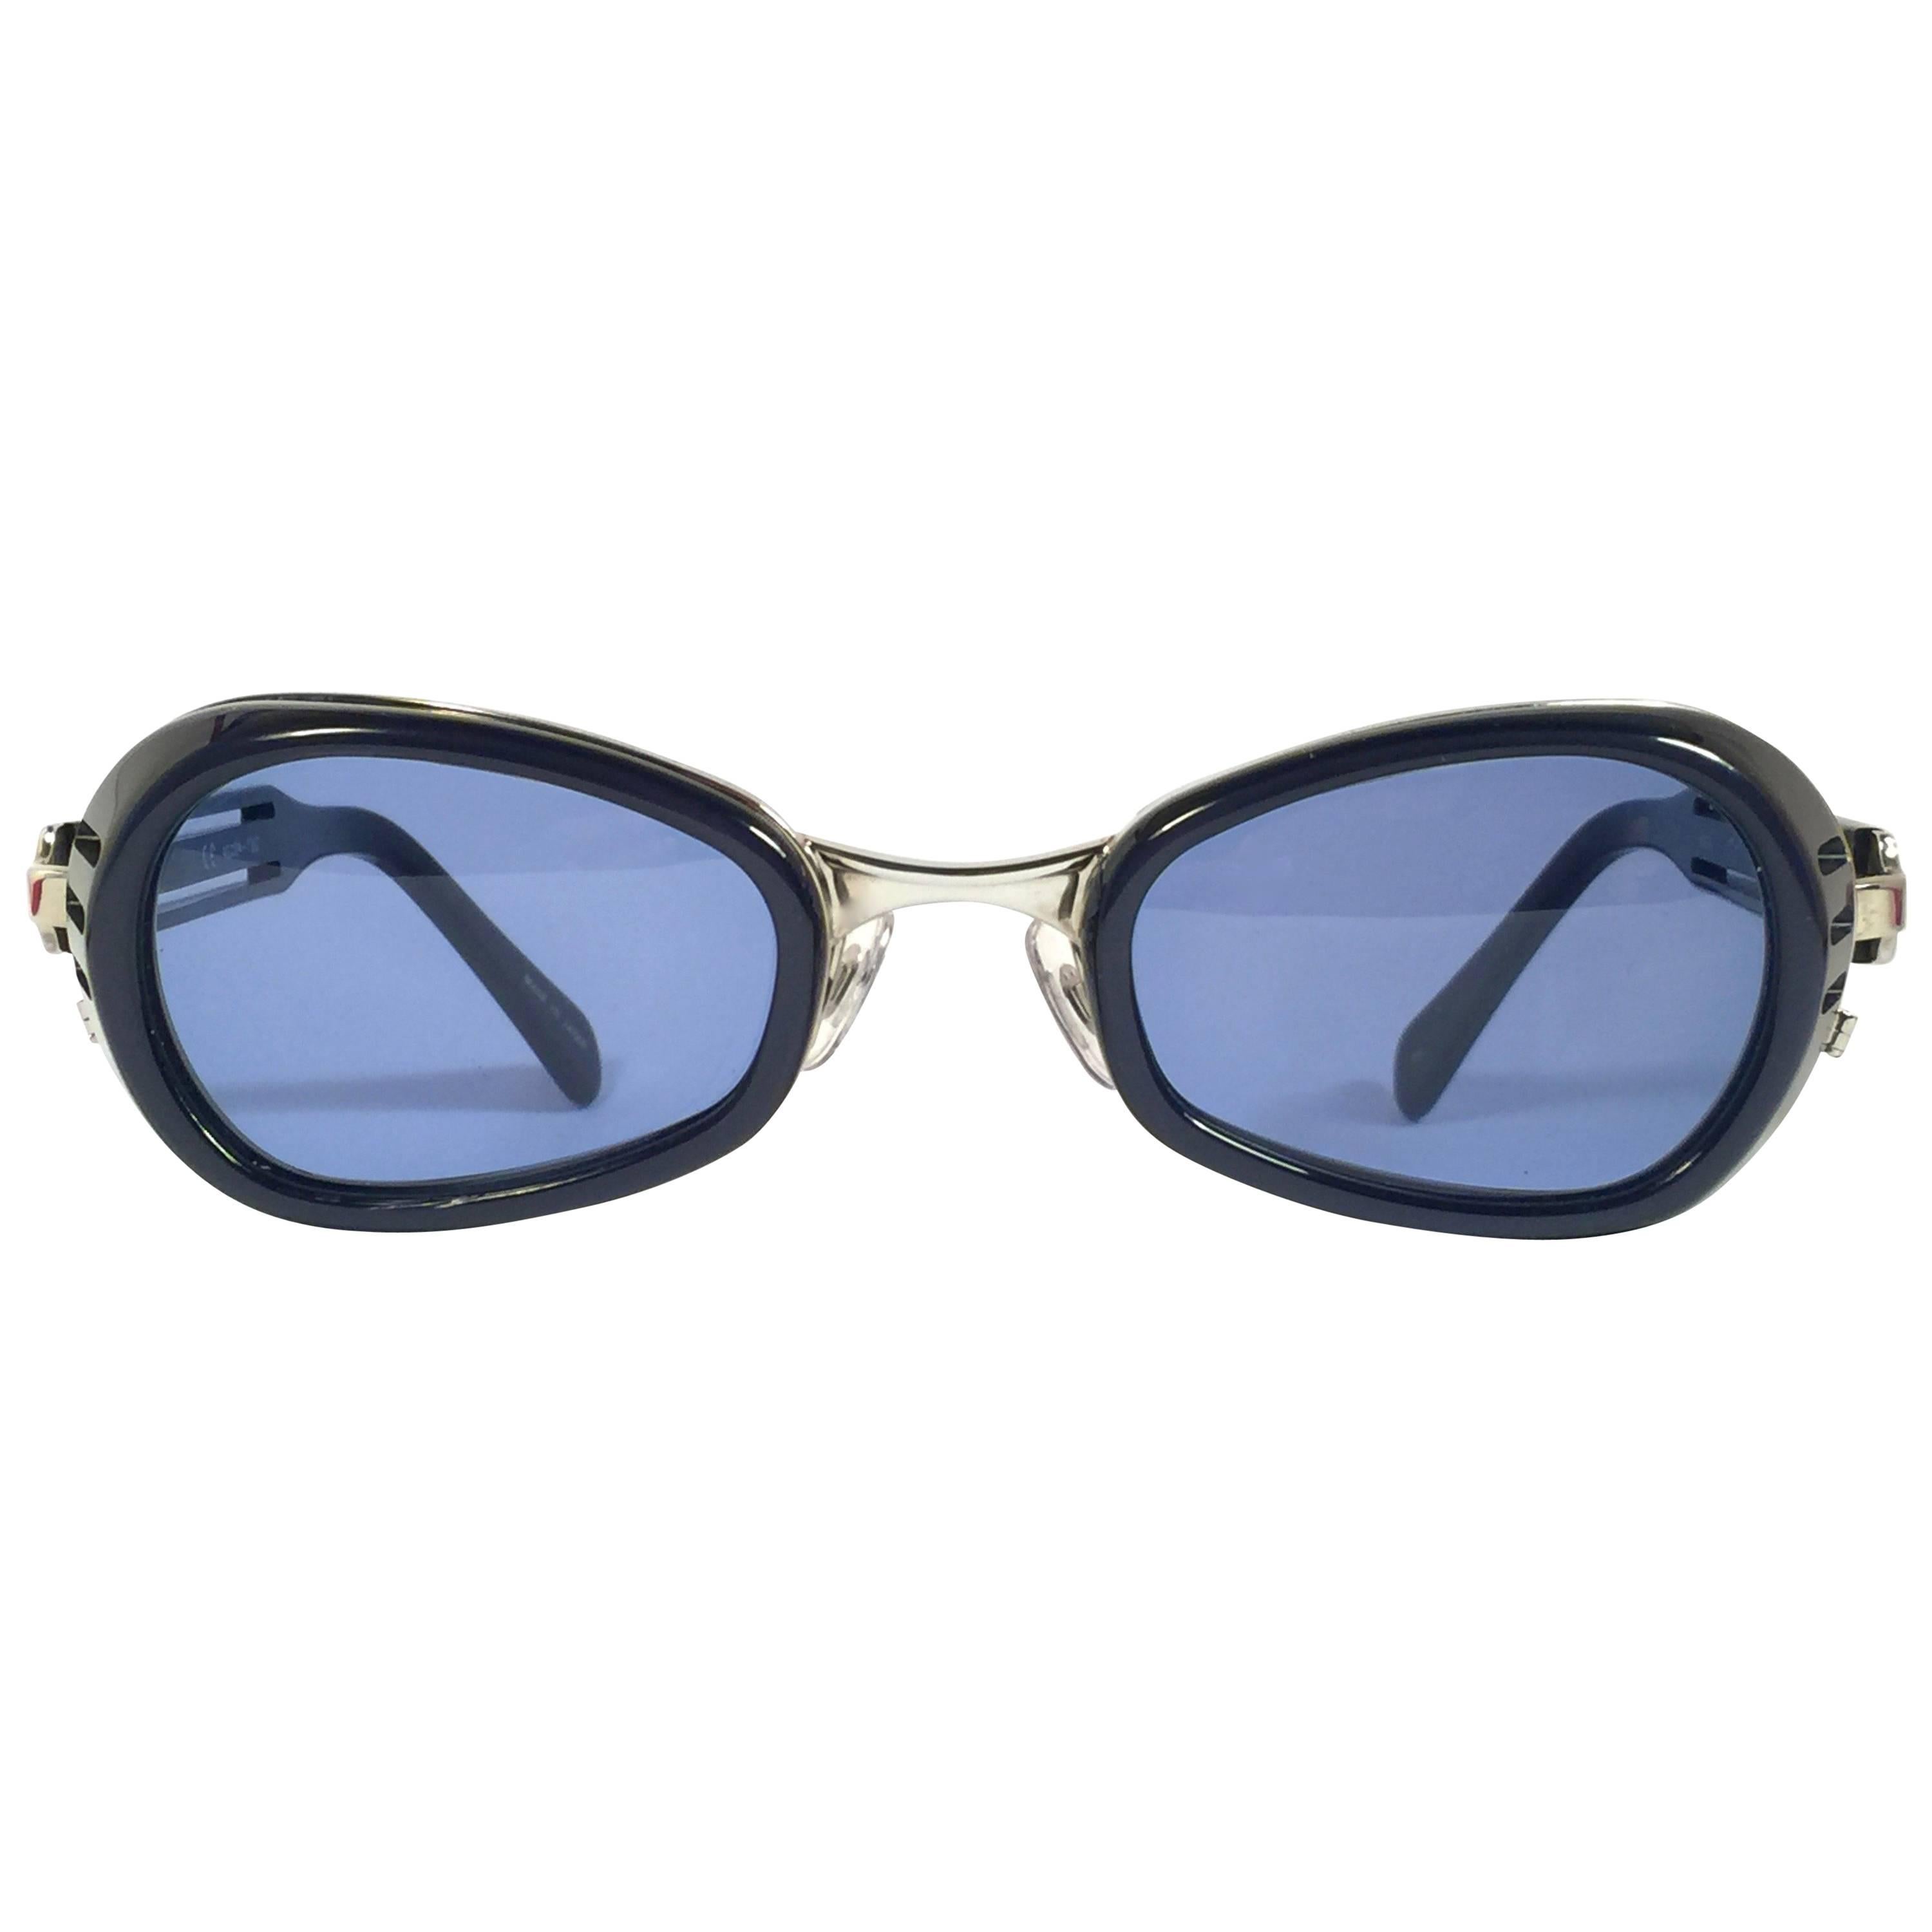 New Vintage Matsuda 10616 Dark Blue & Silver 1990's Made in Japan Sunglasses